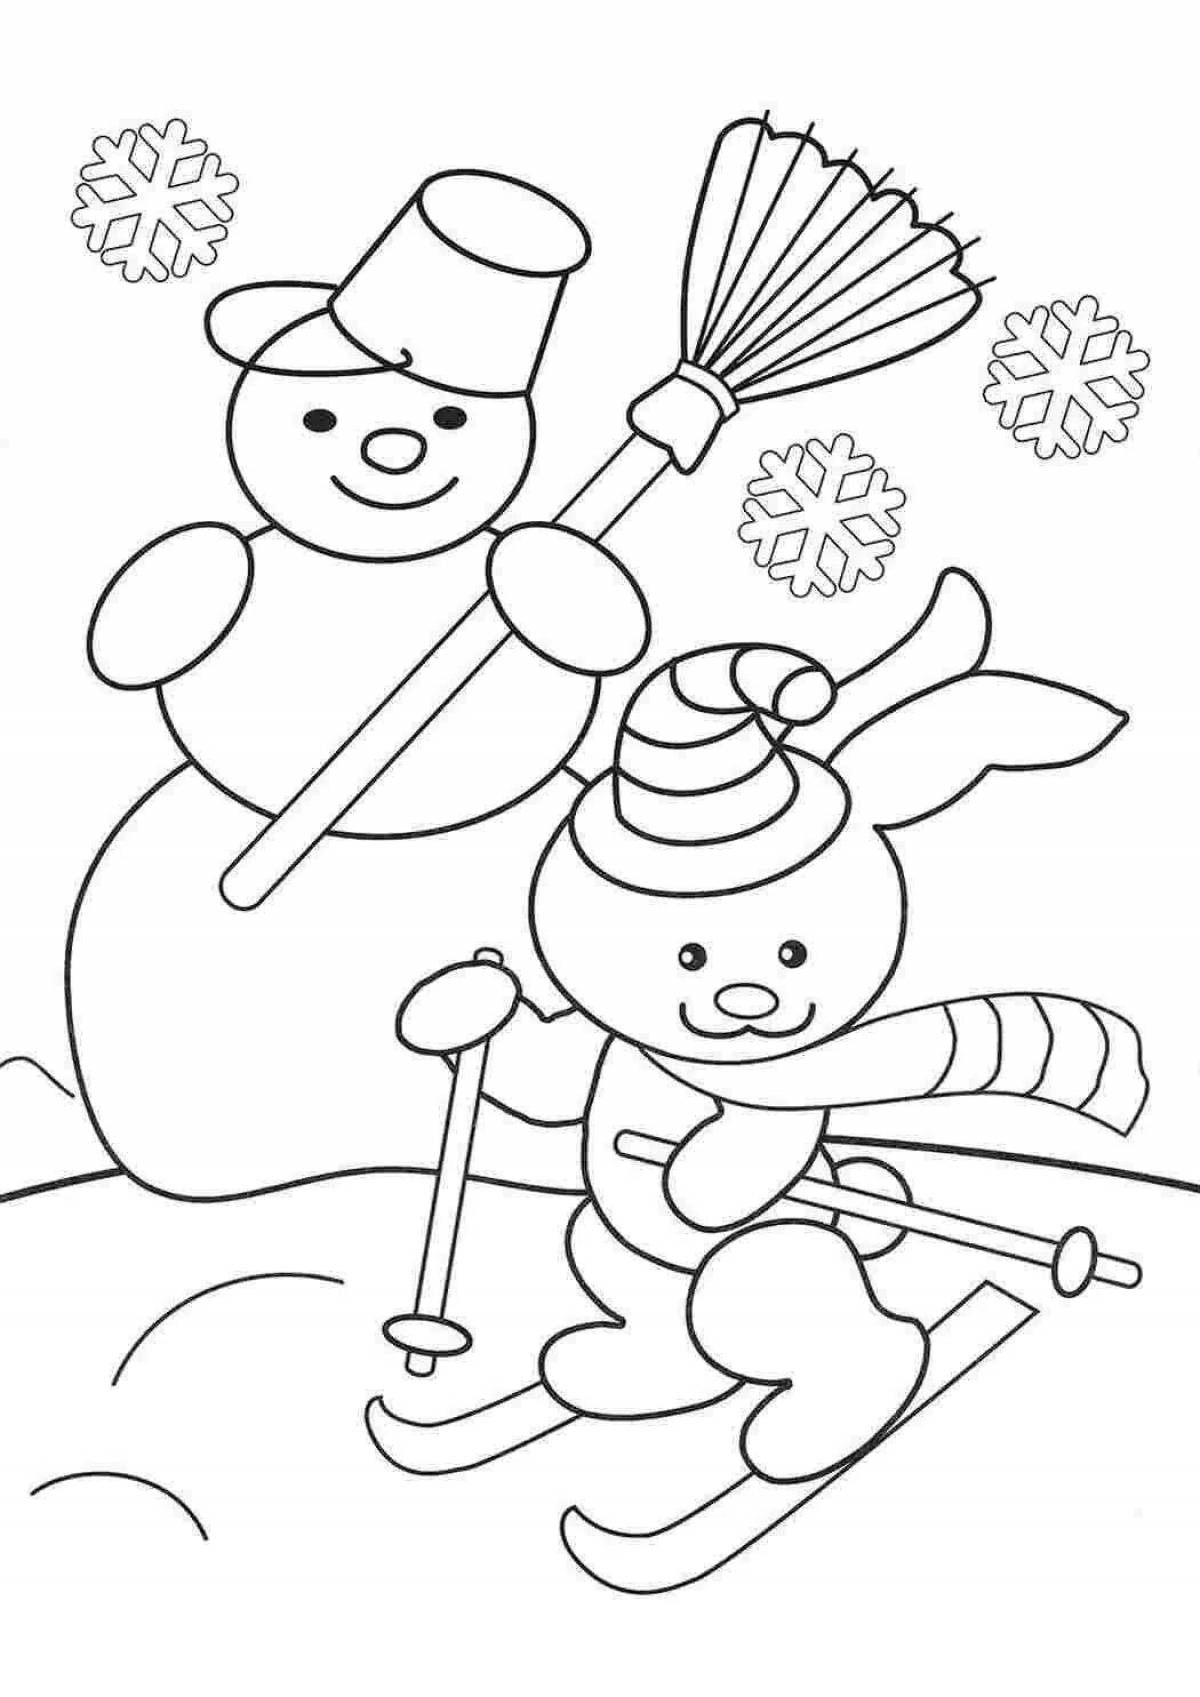 Cute winter coloring book for preschoolers